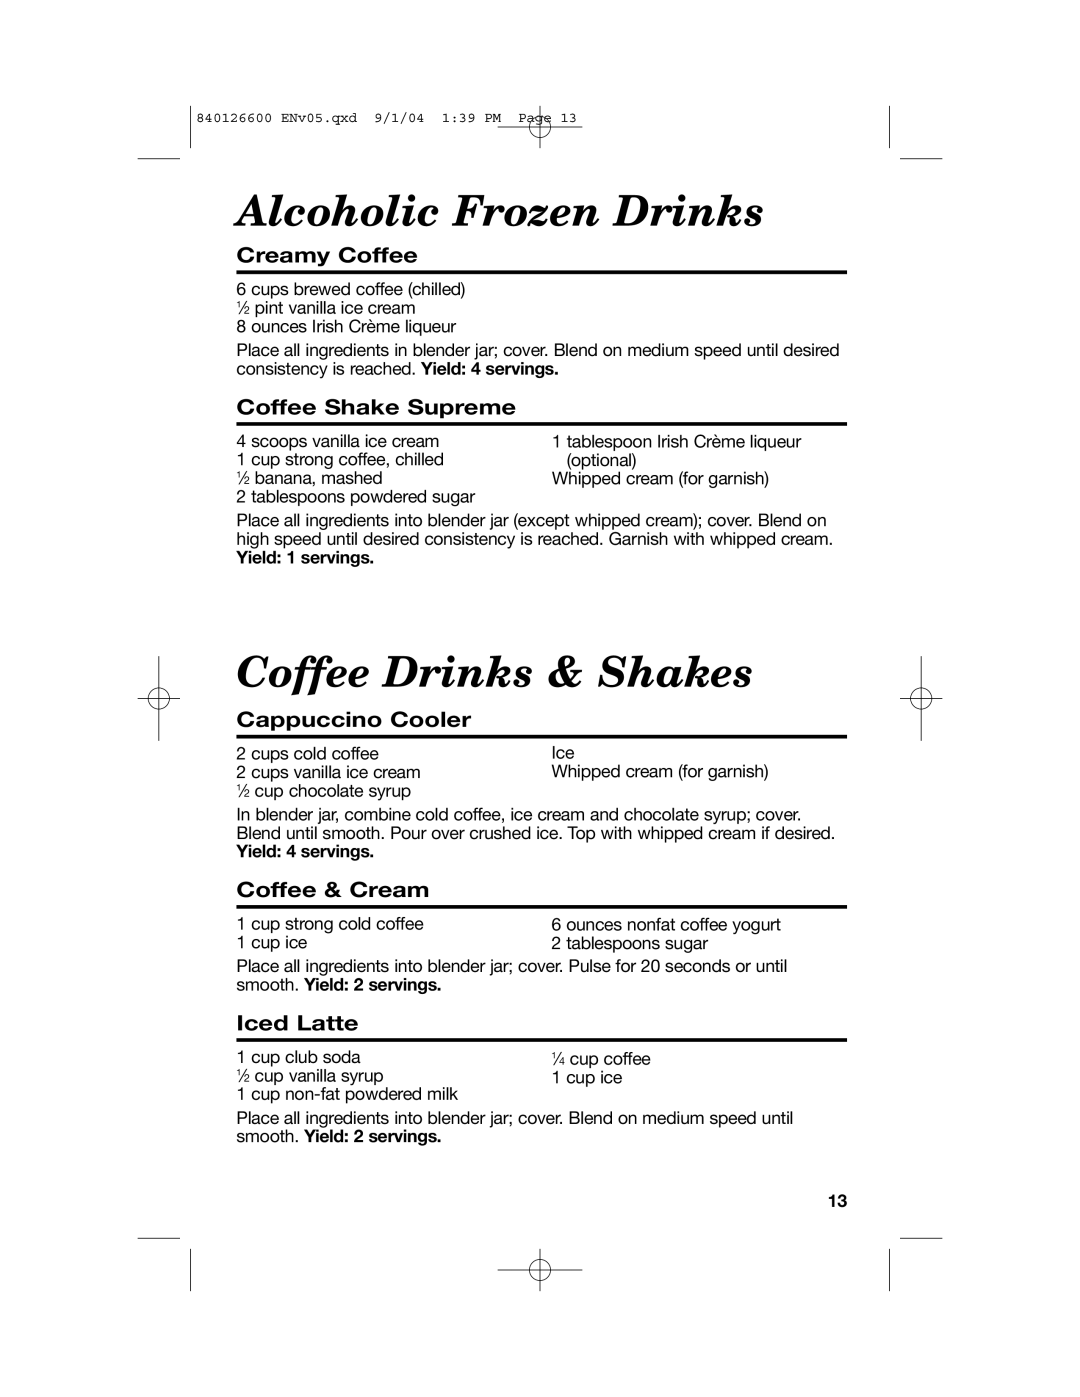 Hamilton Beach 80674 Alcoholic Frozen Drinks, Coffee Drinks & Shakes, Creamy Coffee, Coffee Shake Supreme, Coffee & Cream 